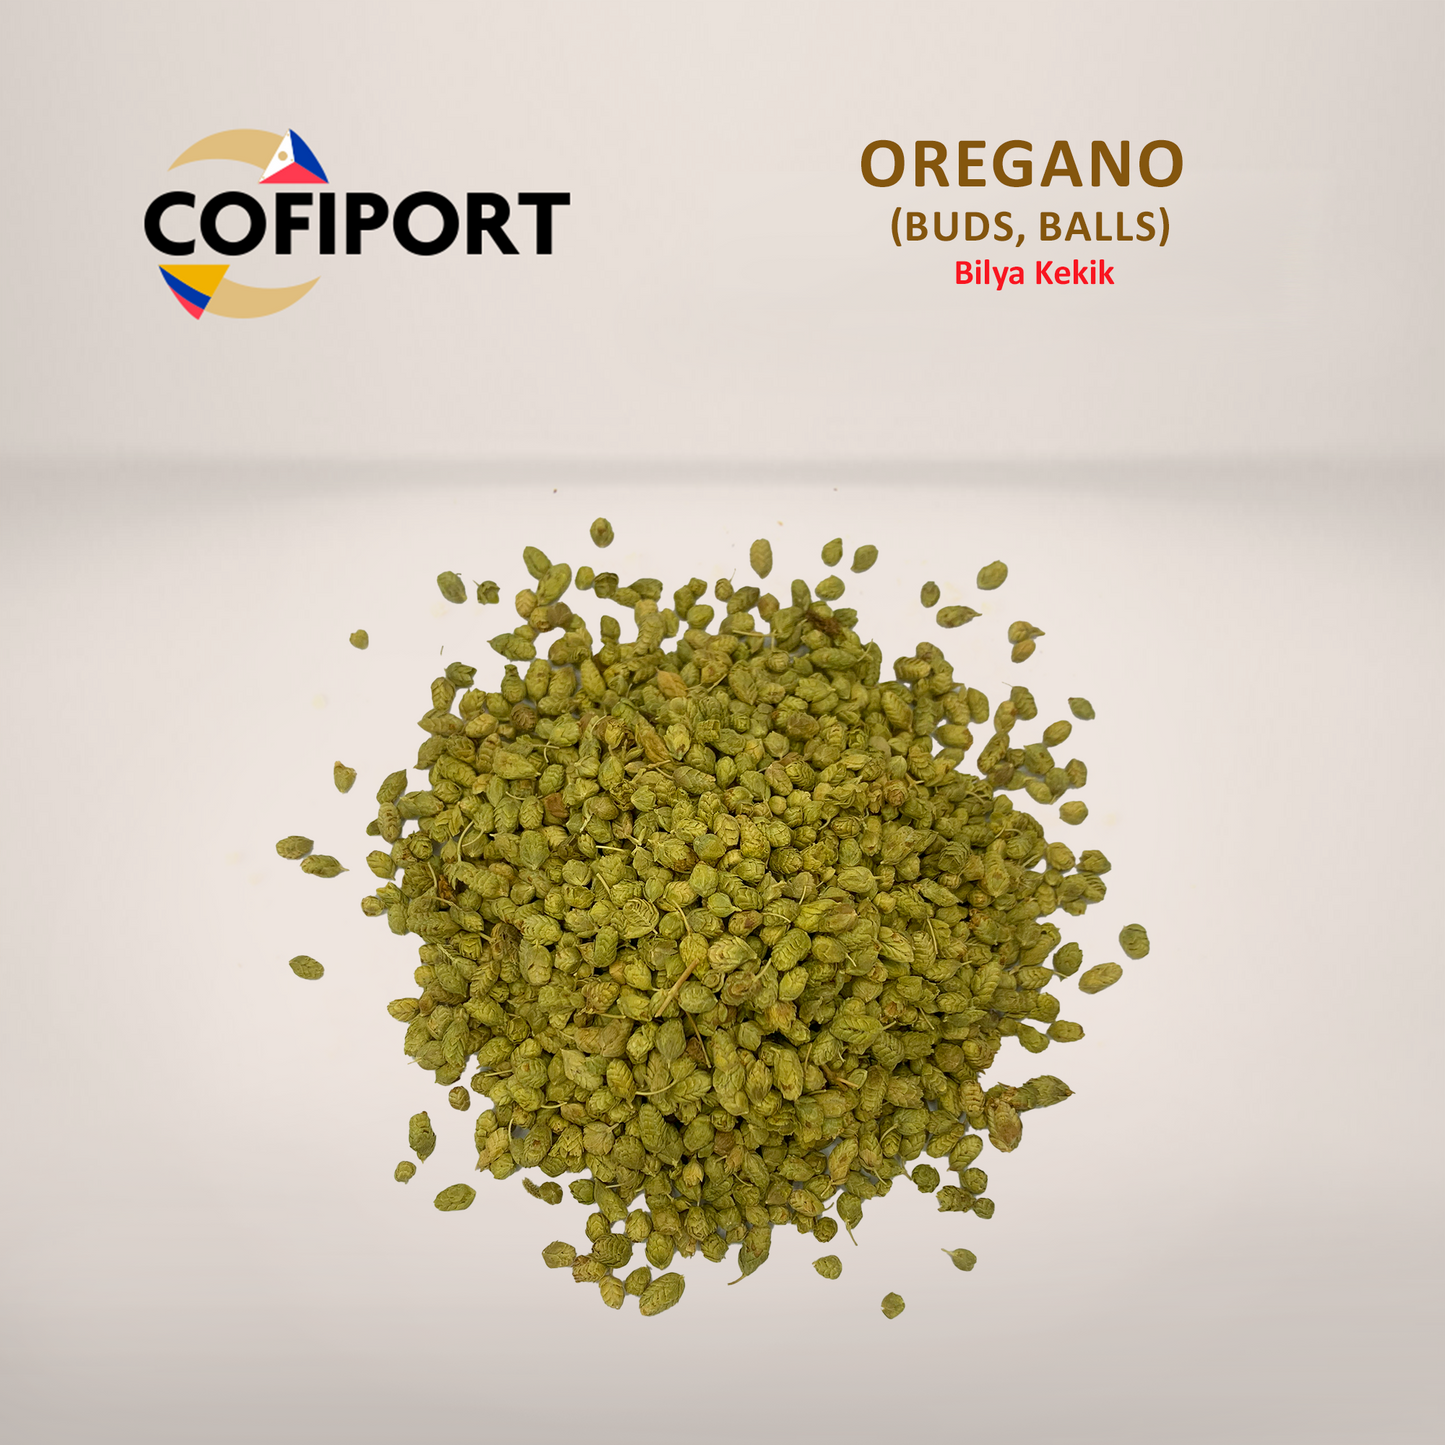 Oregano (Buds, balls)